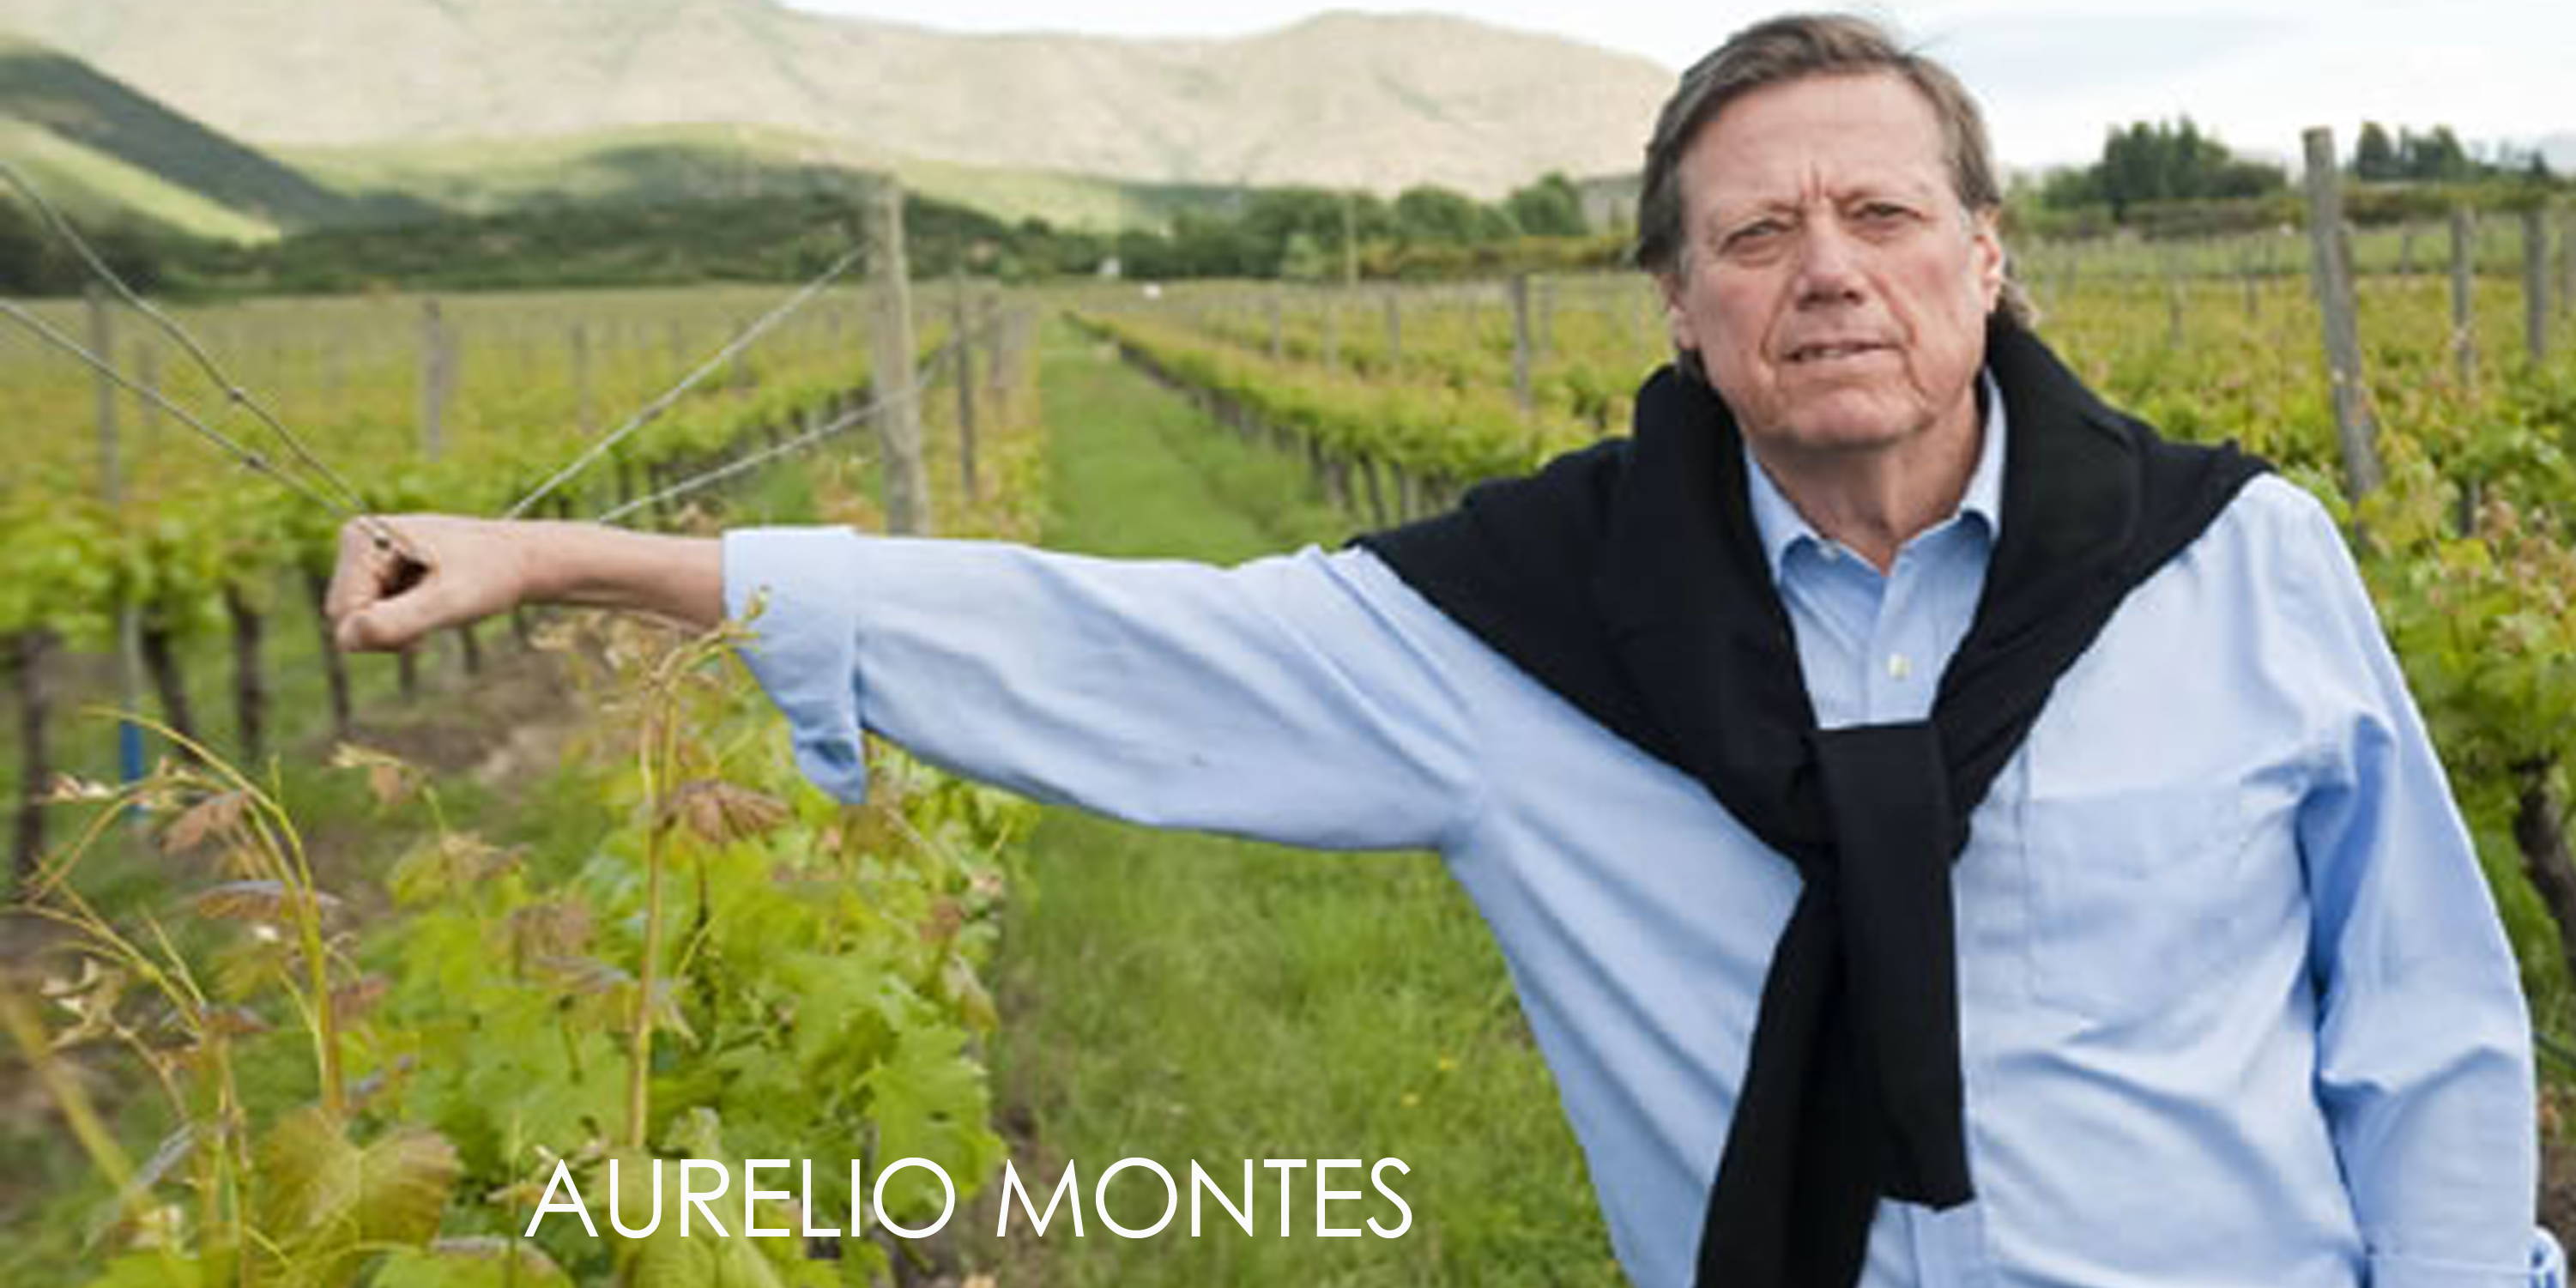 AURELIO MONTES CHILE HISPANIC WINE MAKERS